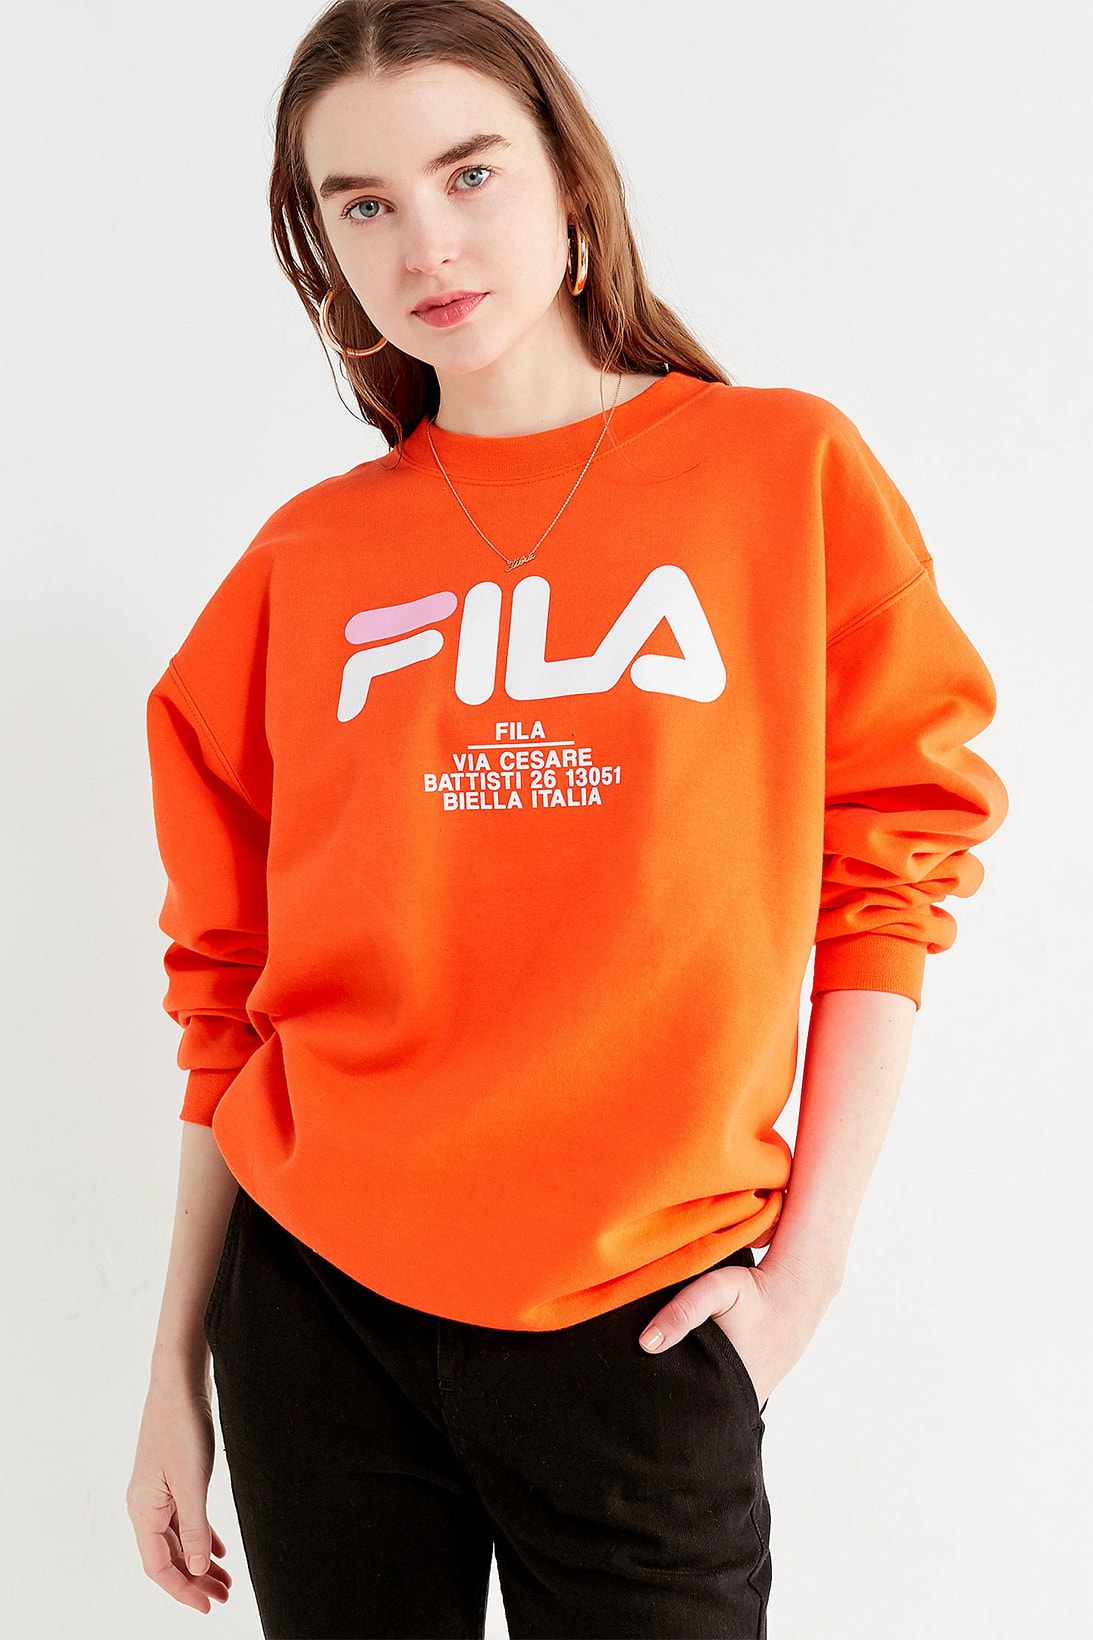 FILA urban outfitters sweater sweatshirt logo orange retro bright where to buy womens